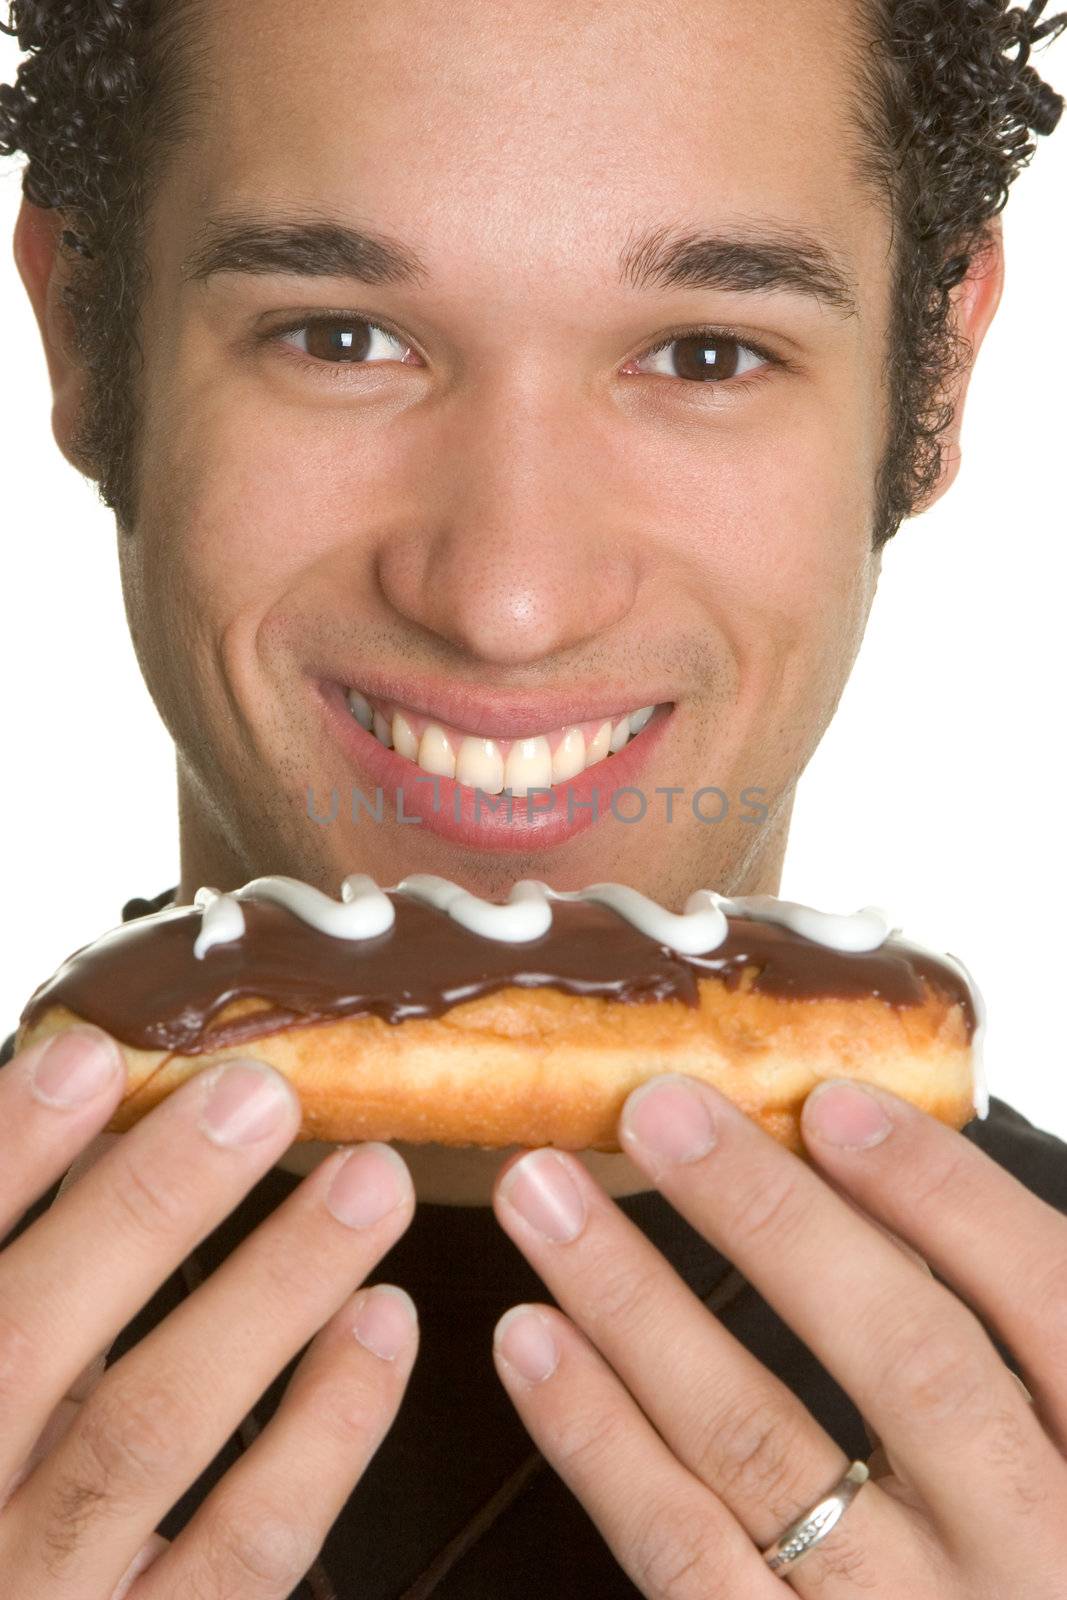 Donut Man by keeweeboy